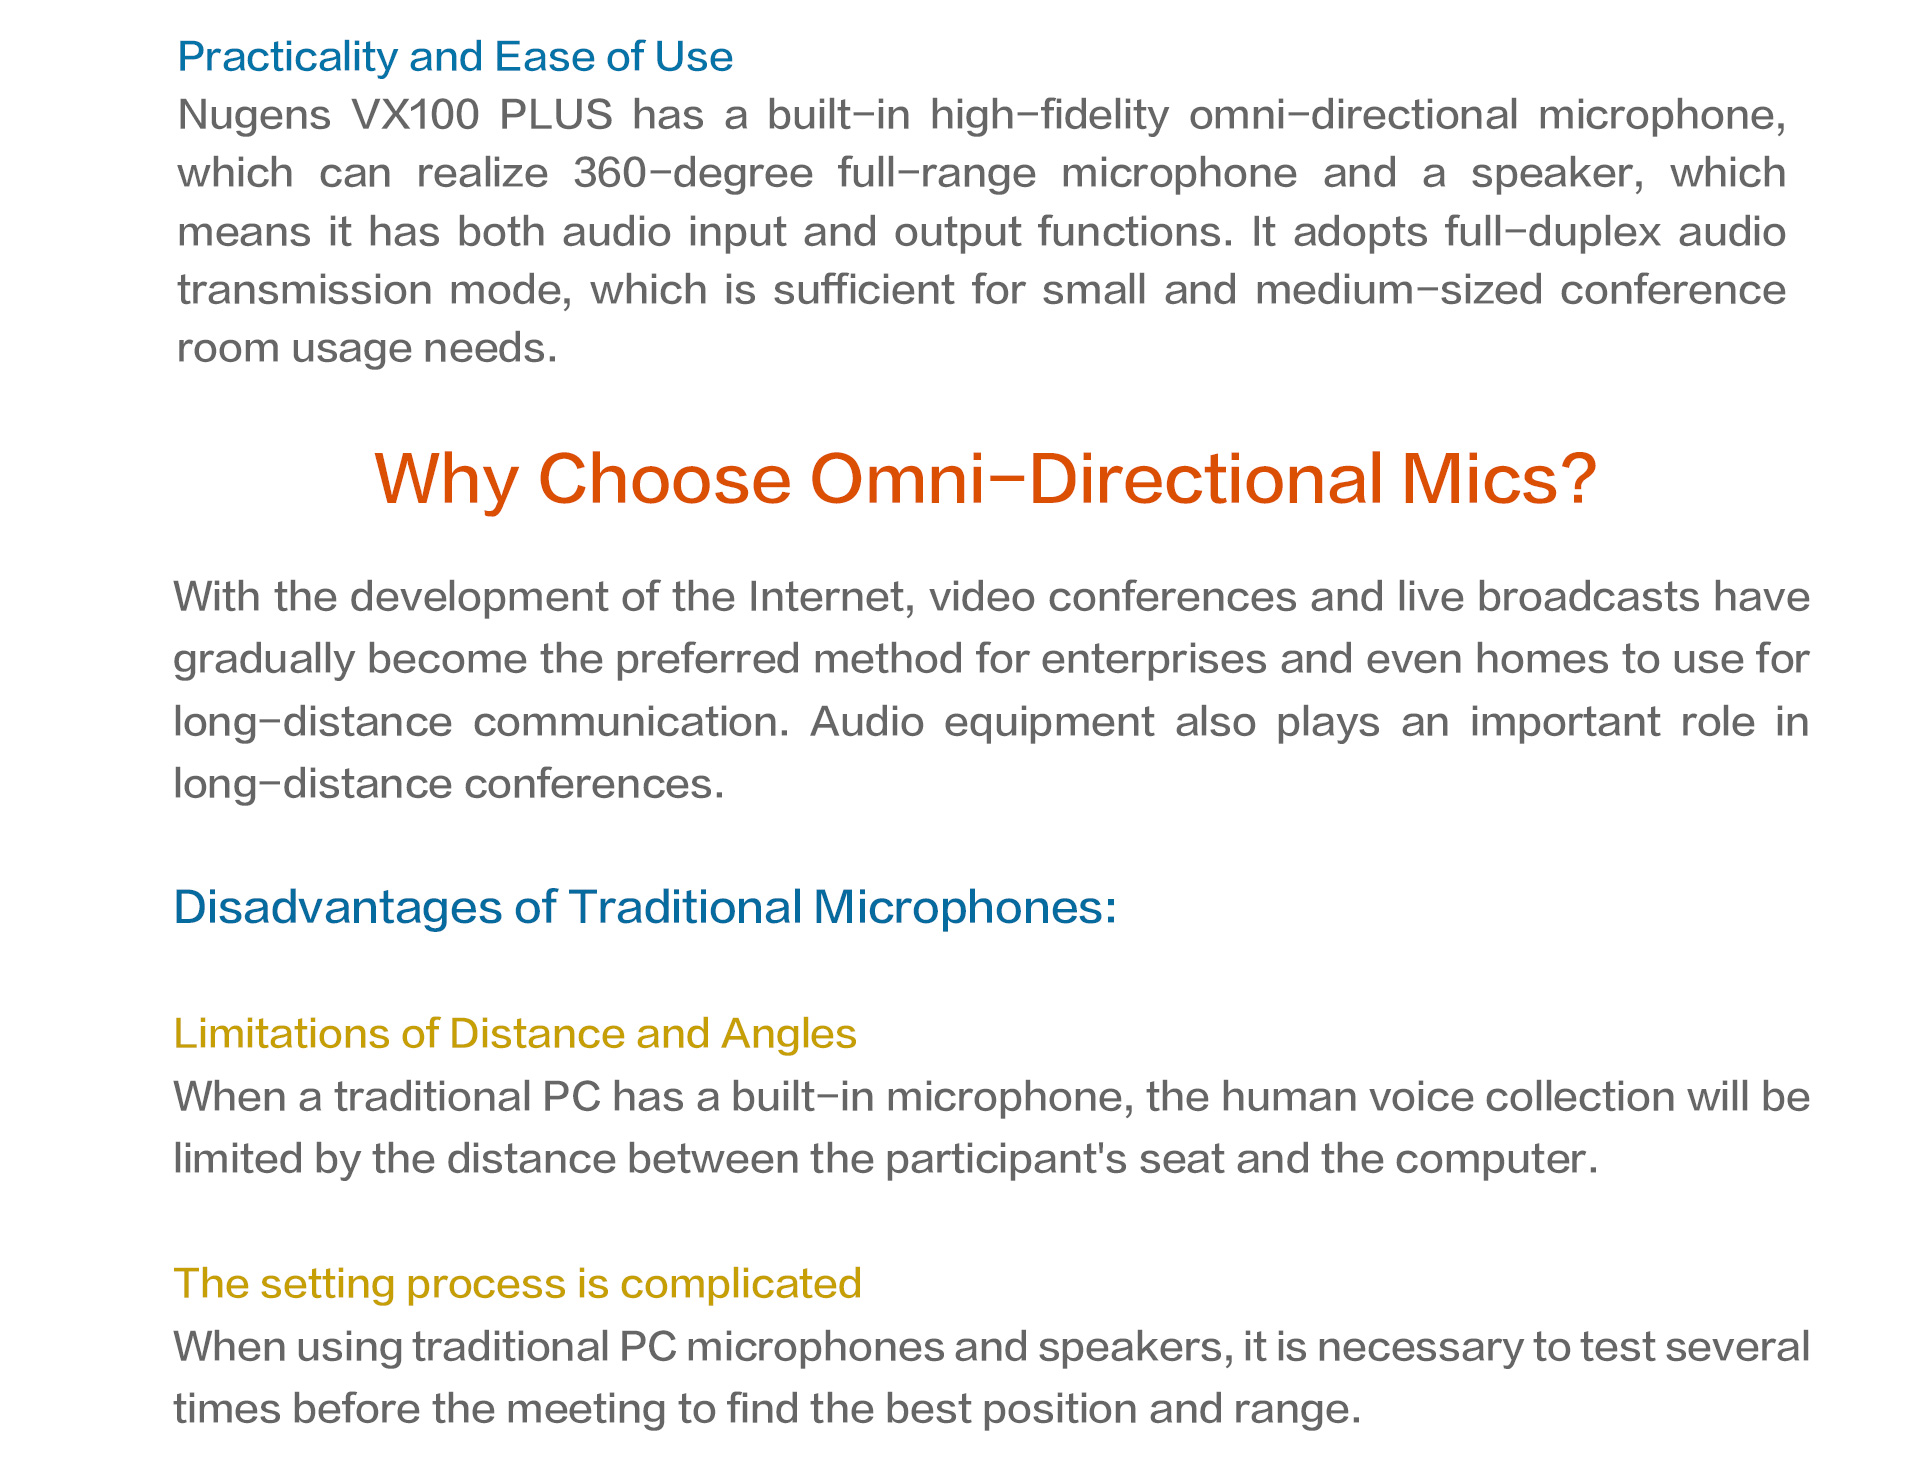 Why choose Omni-Directional Mics?